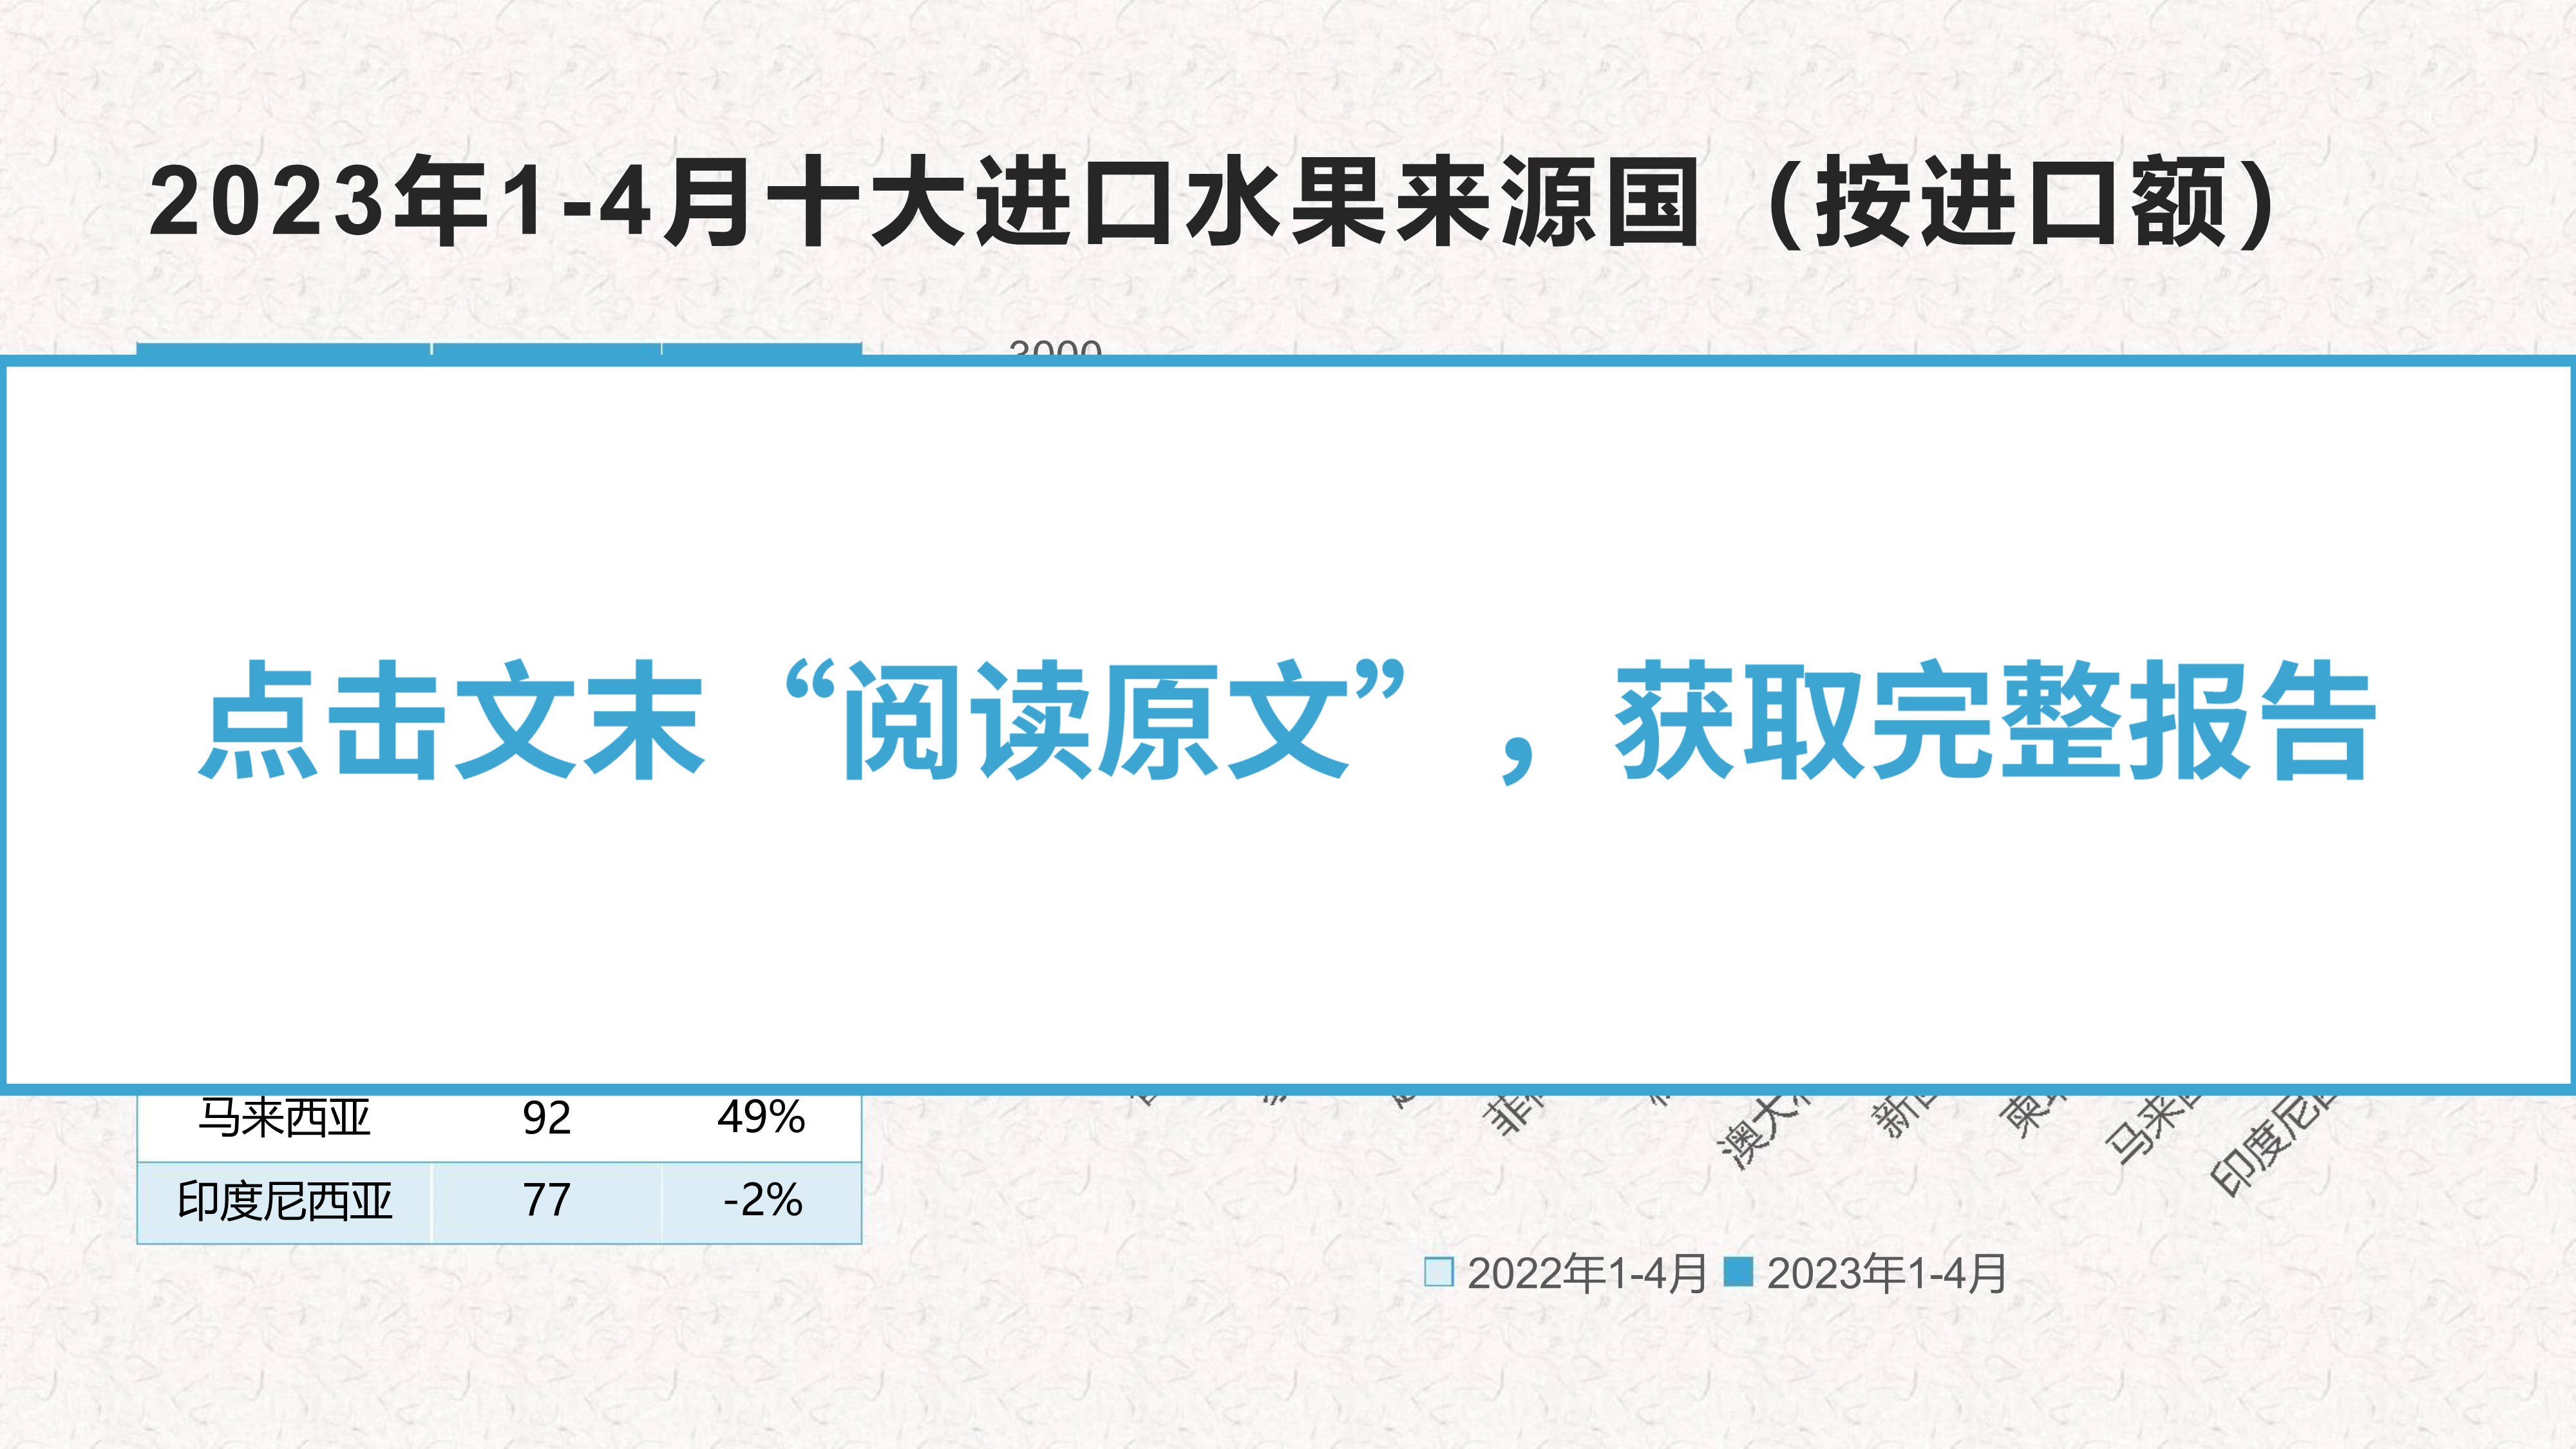 2023年1-4月进口水果报告image4_out.png